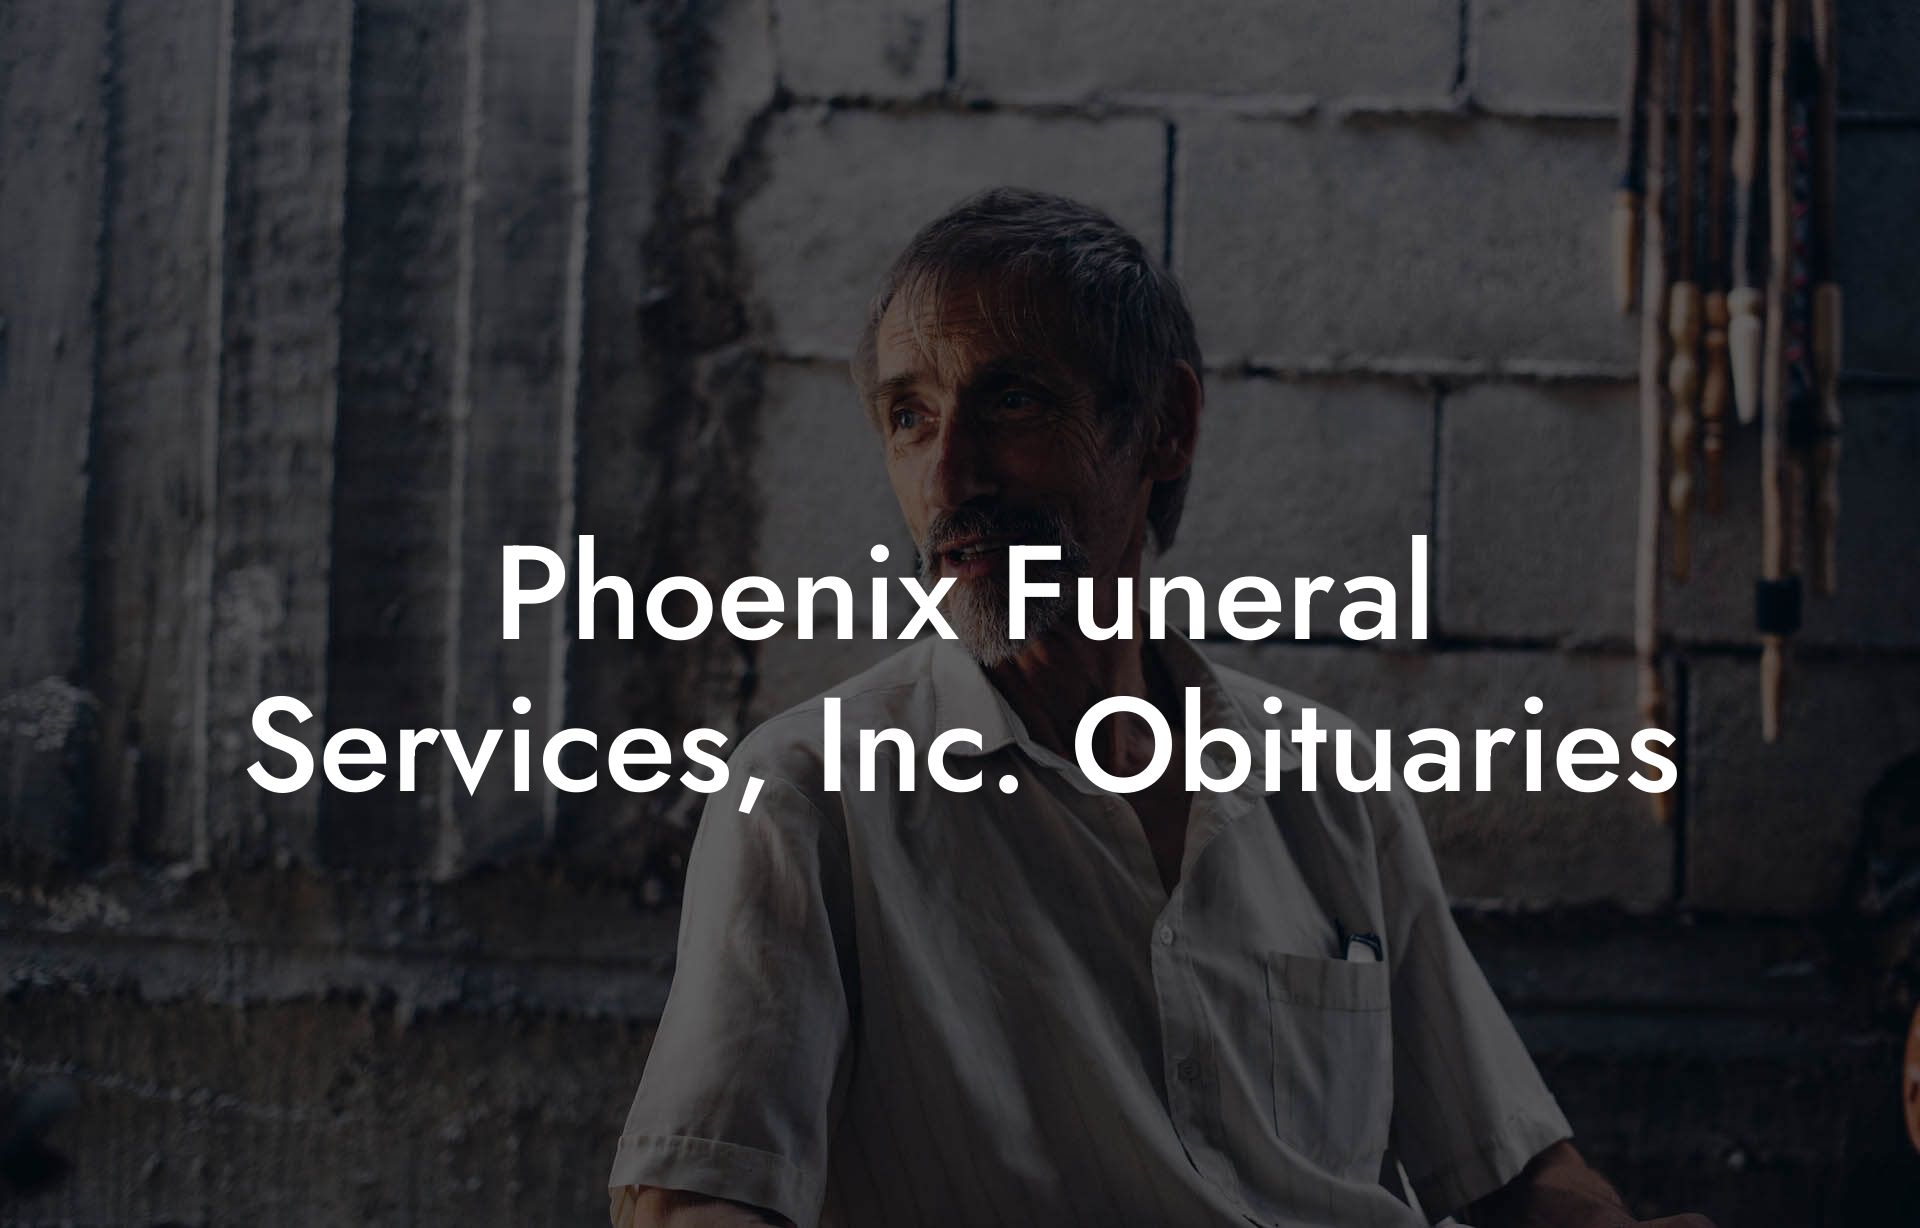 Phoenix Funeral Services, Inc. Obituaries